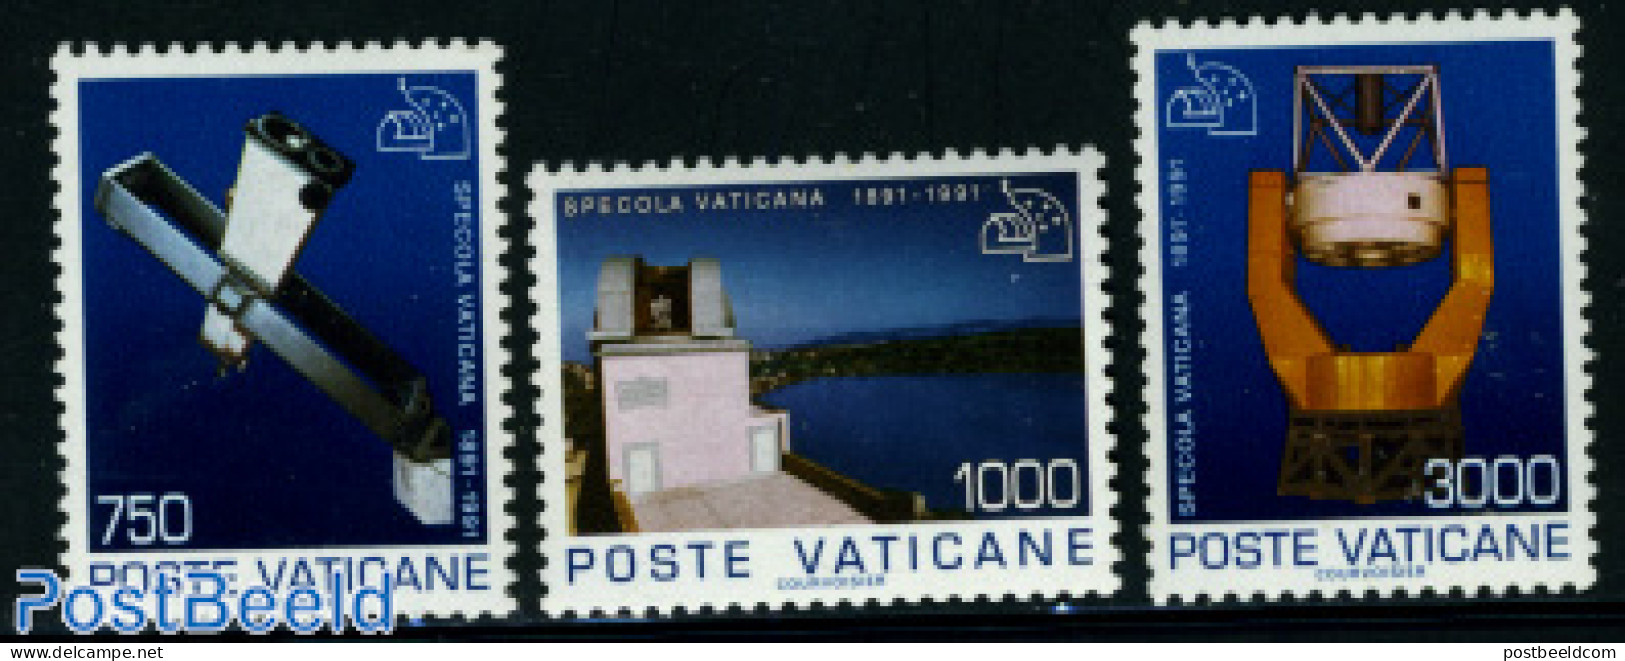 Vatican 1991 Specola Vaticana 3v, Mint NH, Science - Astronomy - Nuovi